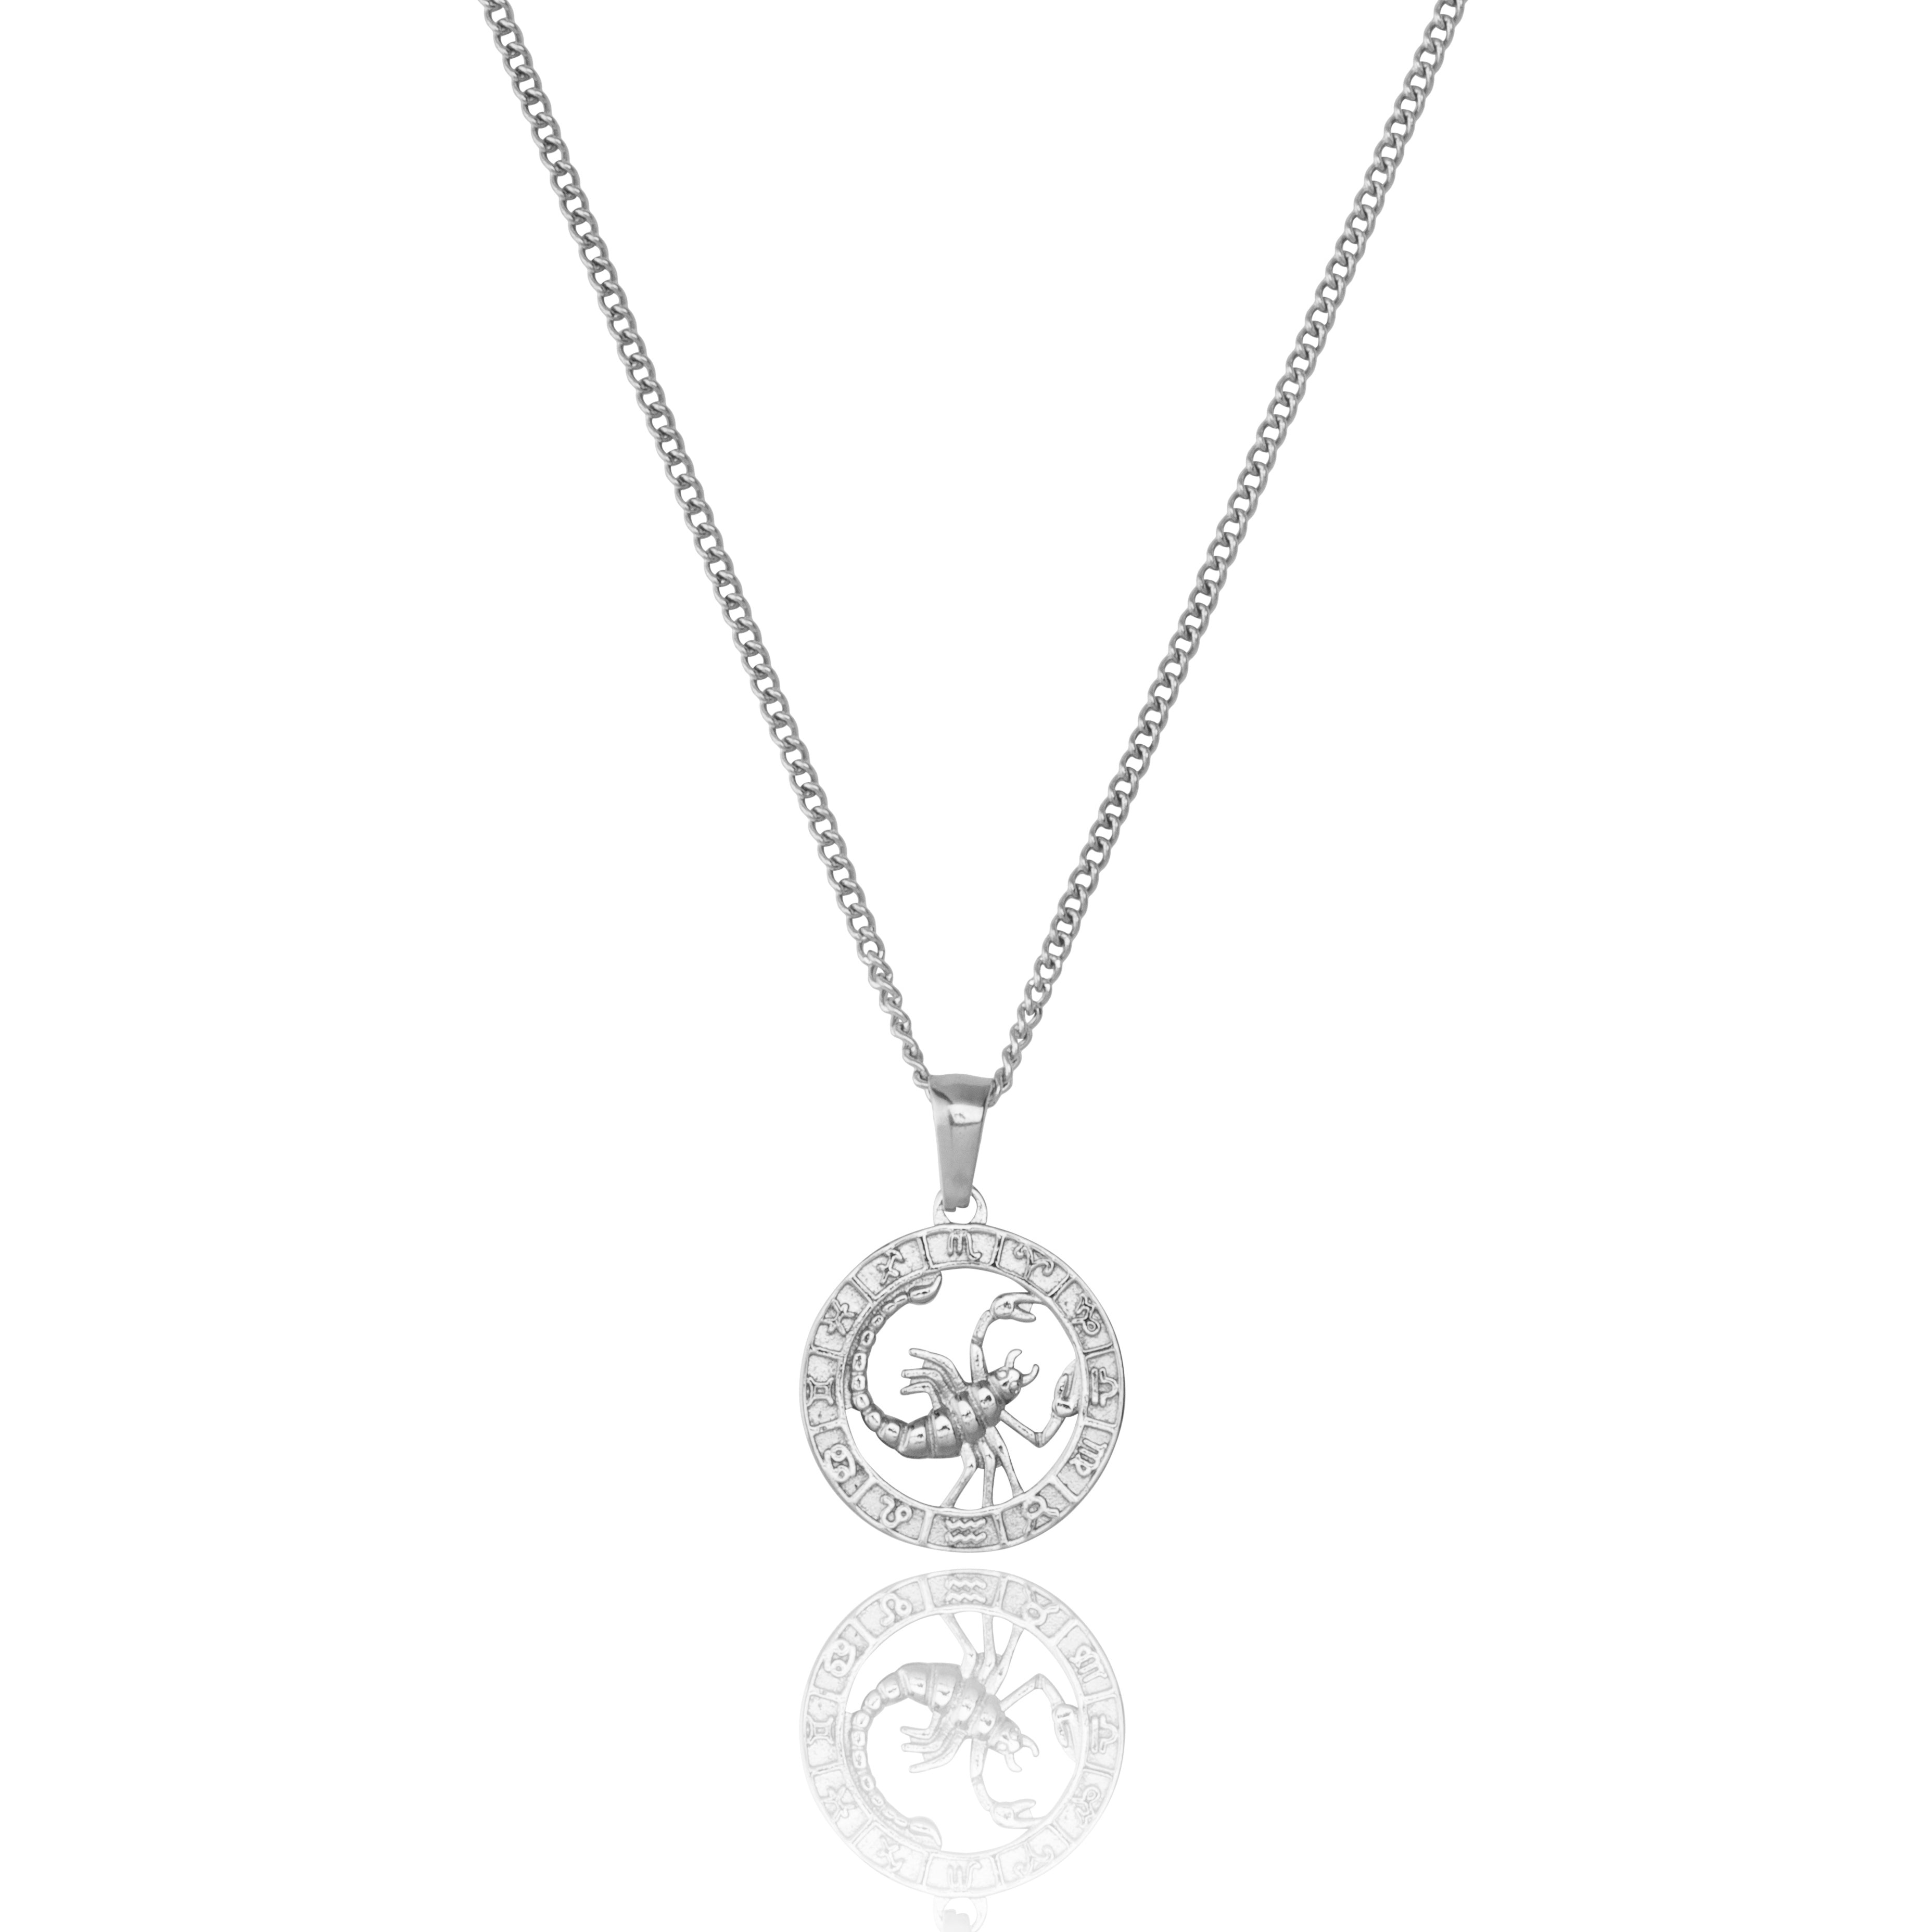 Stainless Steel Scorpio Zodiac pendant and chain